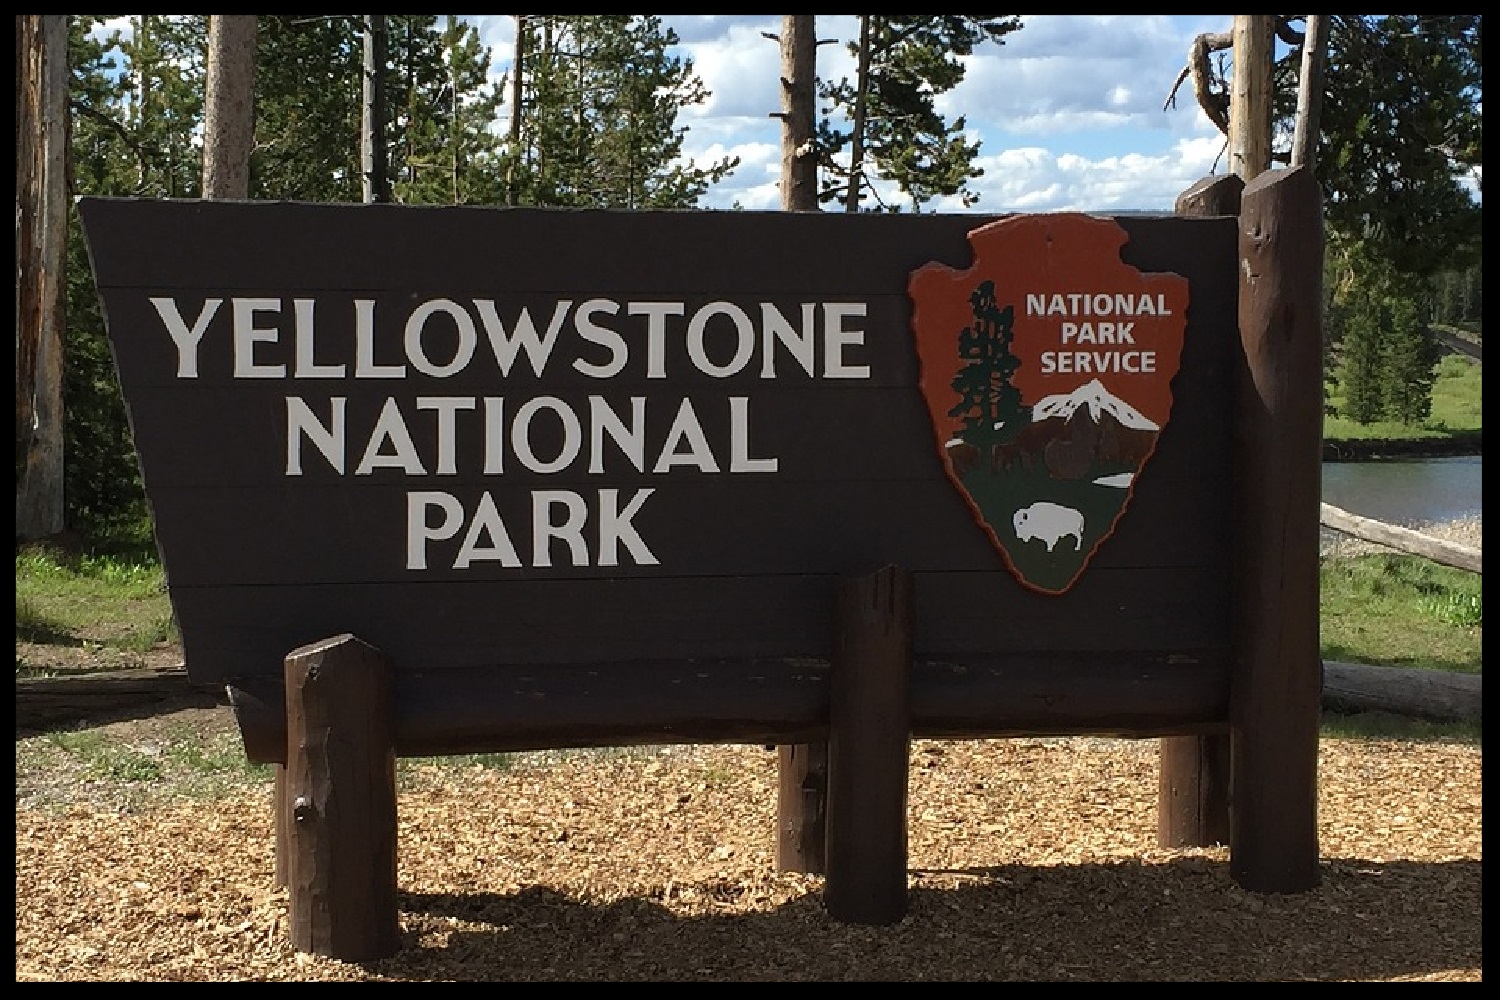 Buffalo Bill Cody's Yellowstone National Park (YNP, WY)